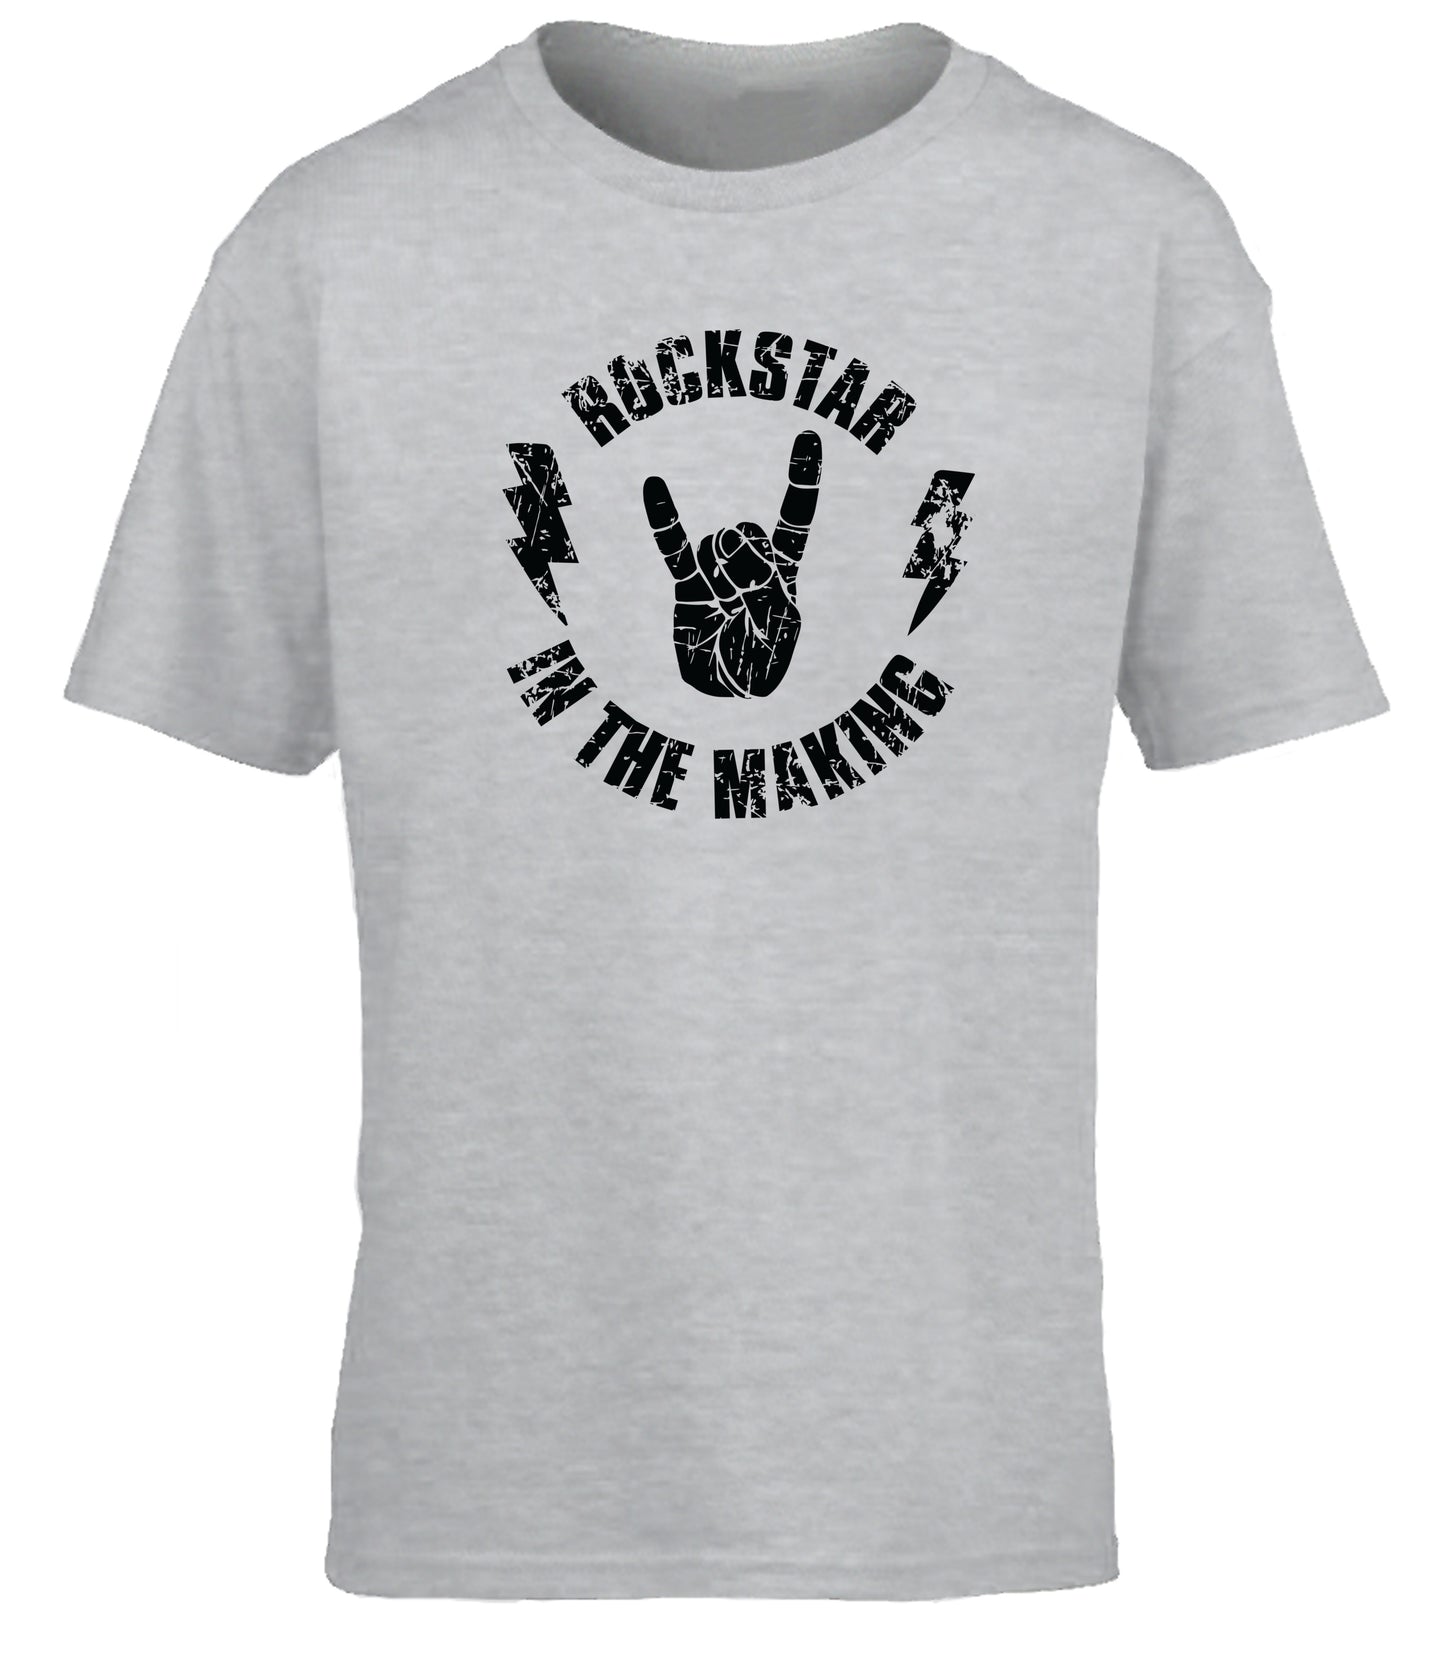 Rockstar in The Making children's T-shirt